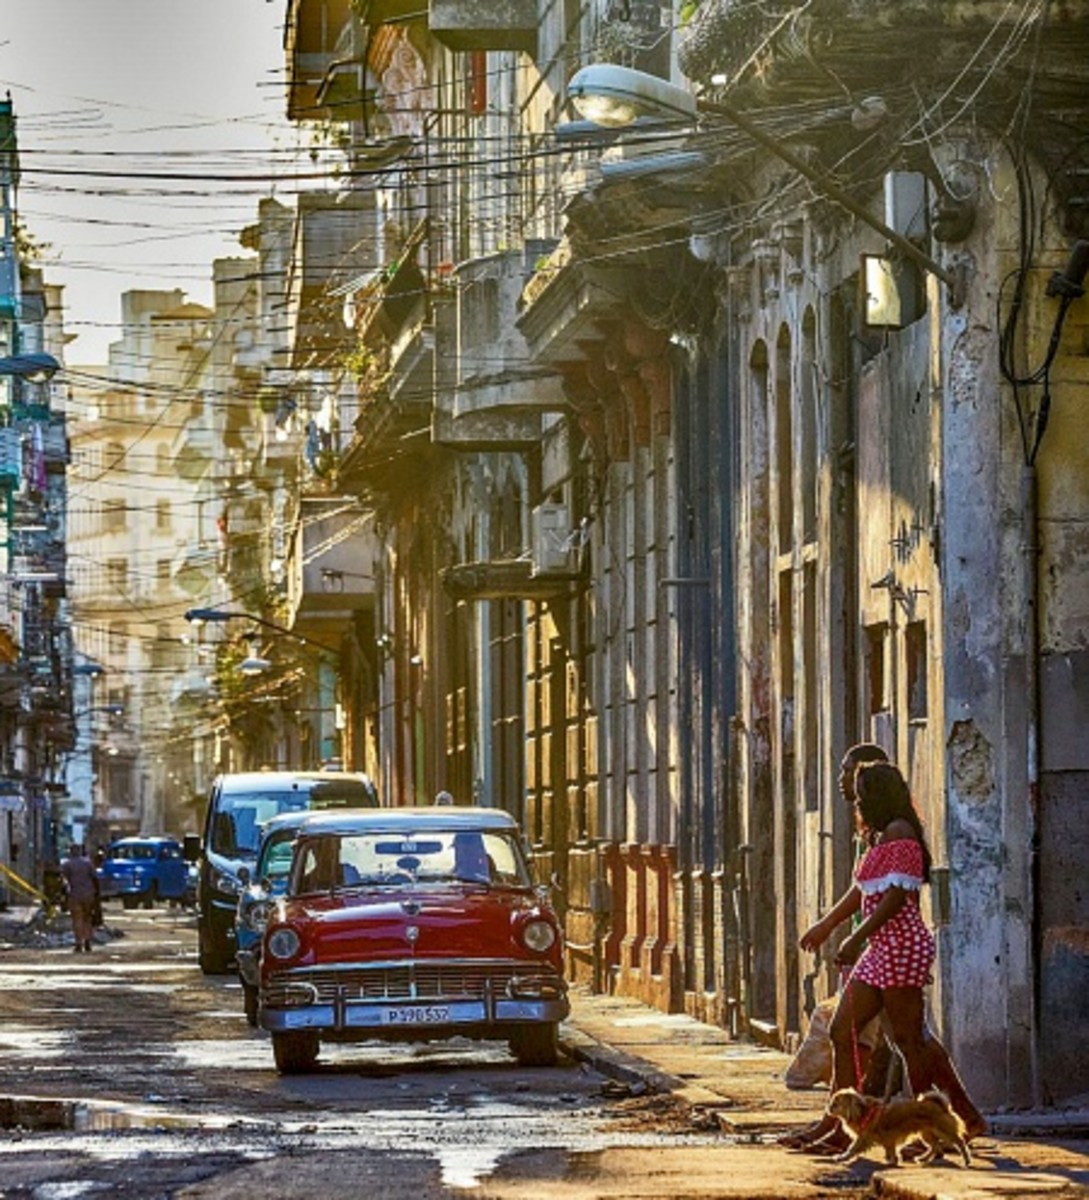 Harsh Restrictions on Cuba